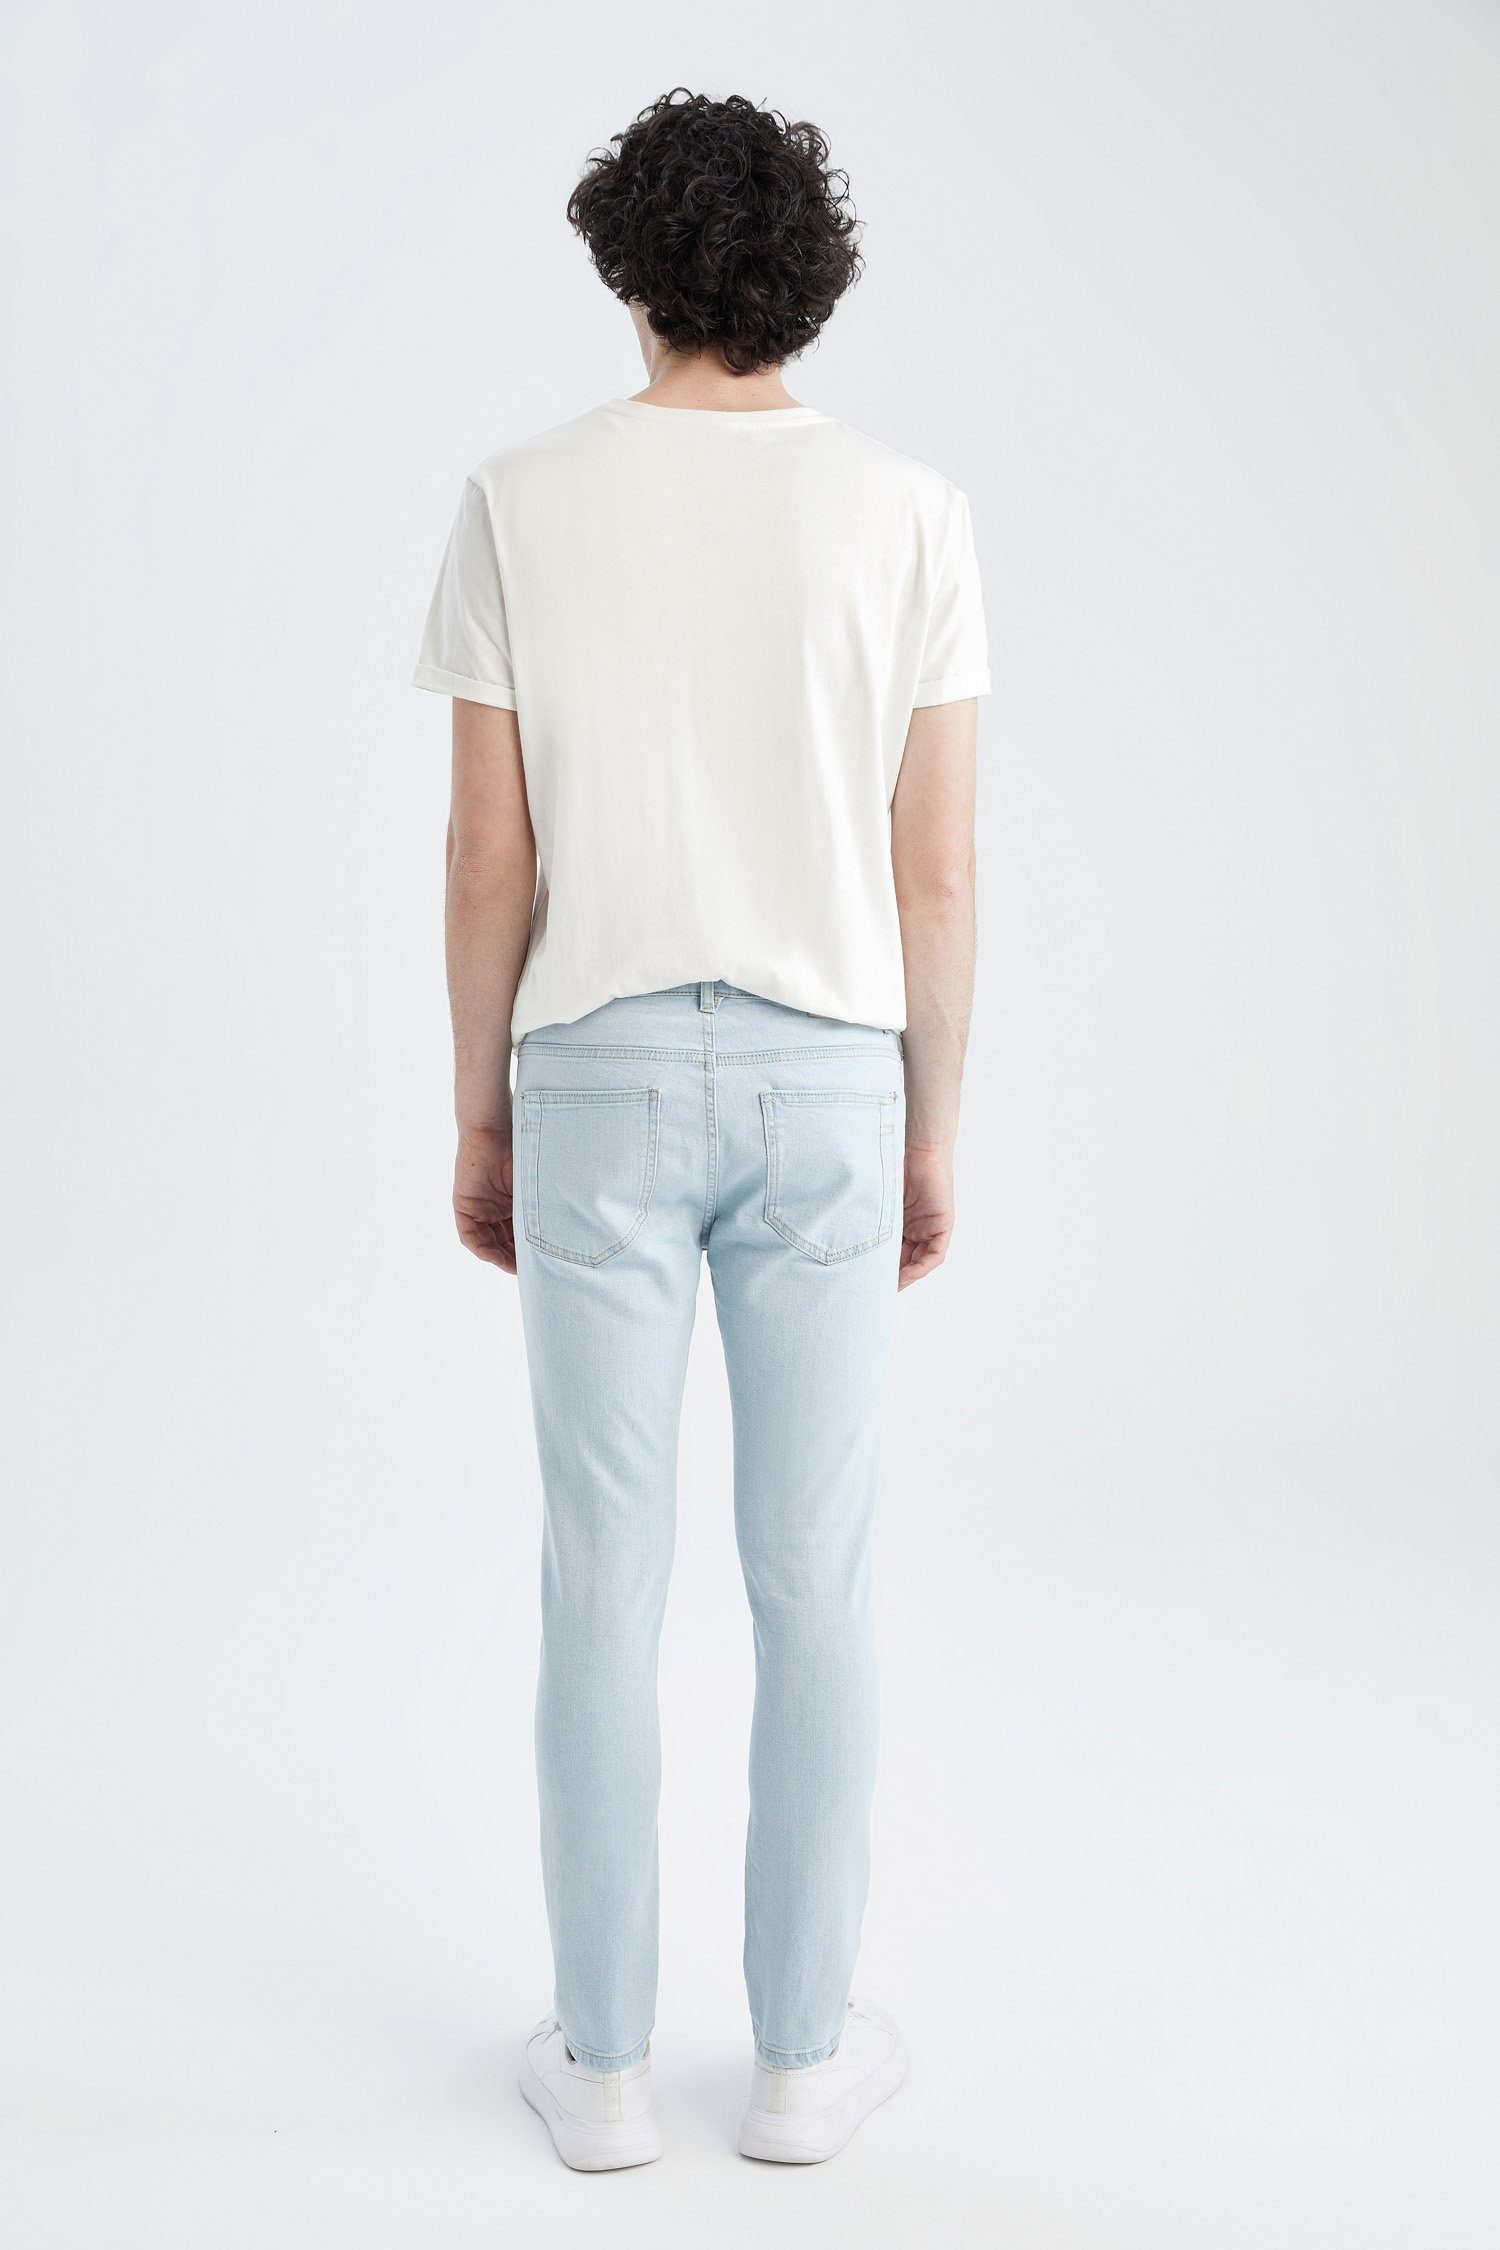 DeFacto Skinny-fit-Jeans Herren Slim-fit-Jeans FIT - DENIM SKINNY CARLO